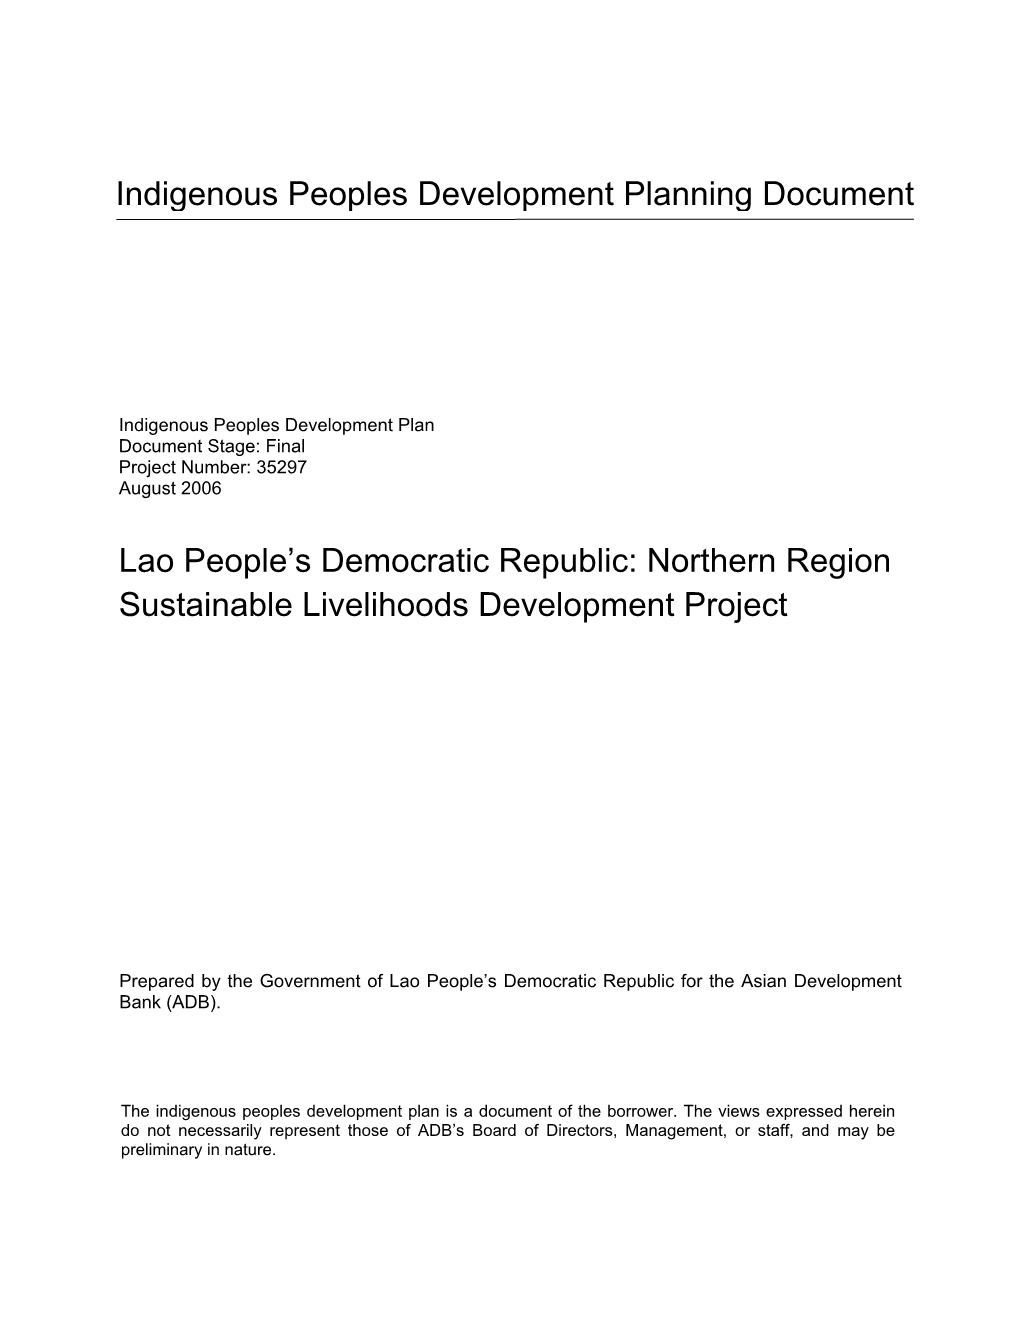 Ethnic Groups Development Plan [2006] Adblpres 4